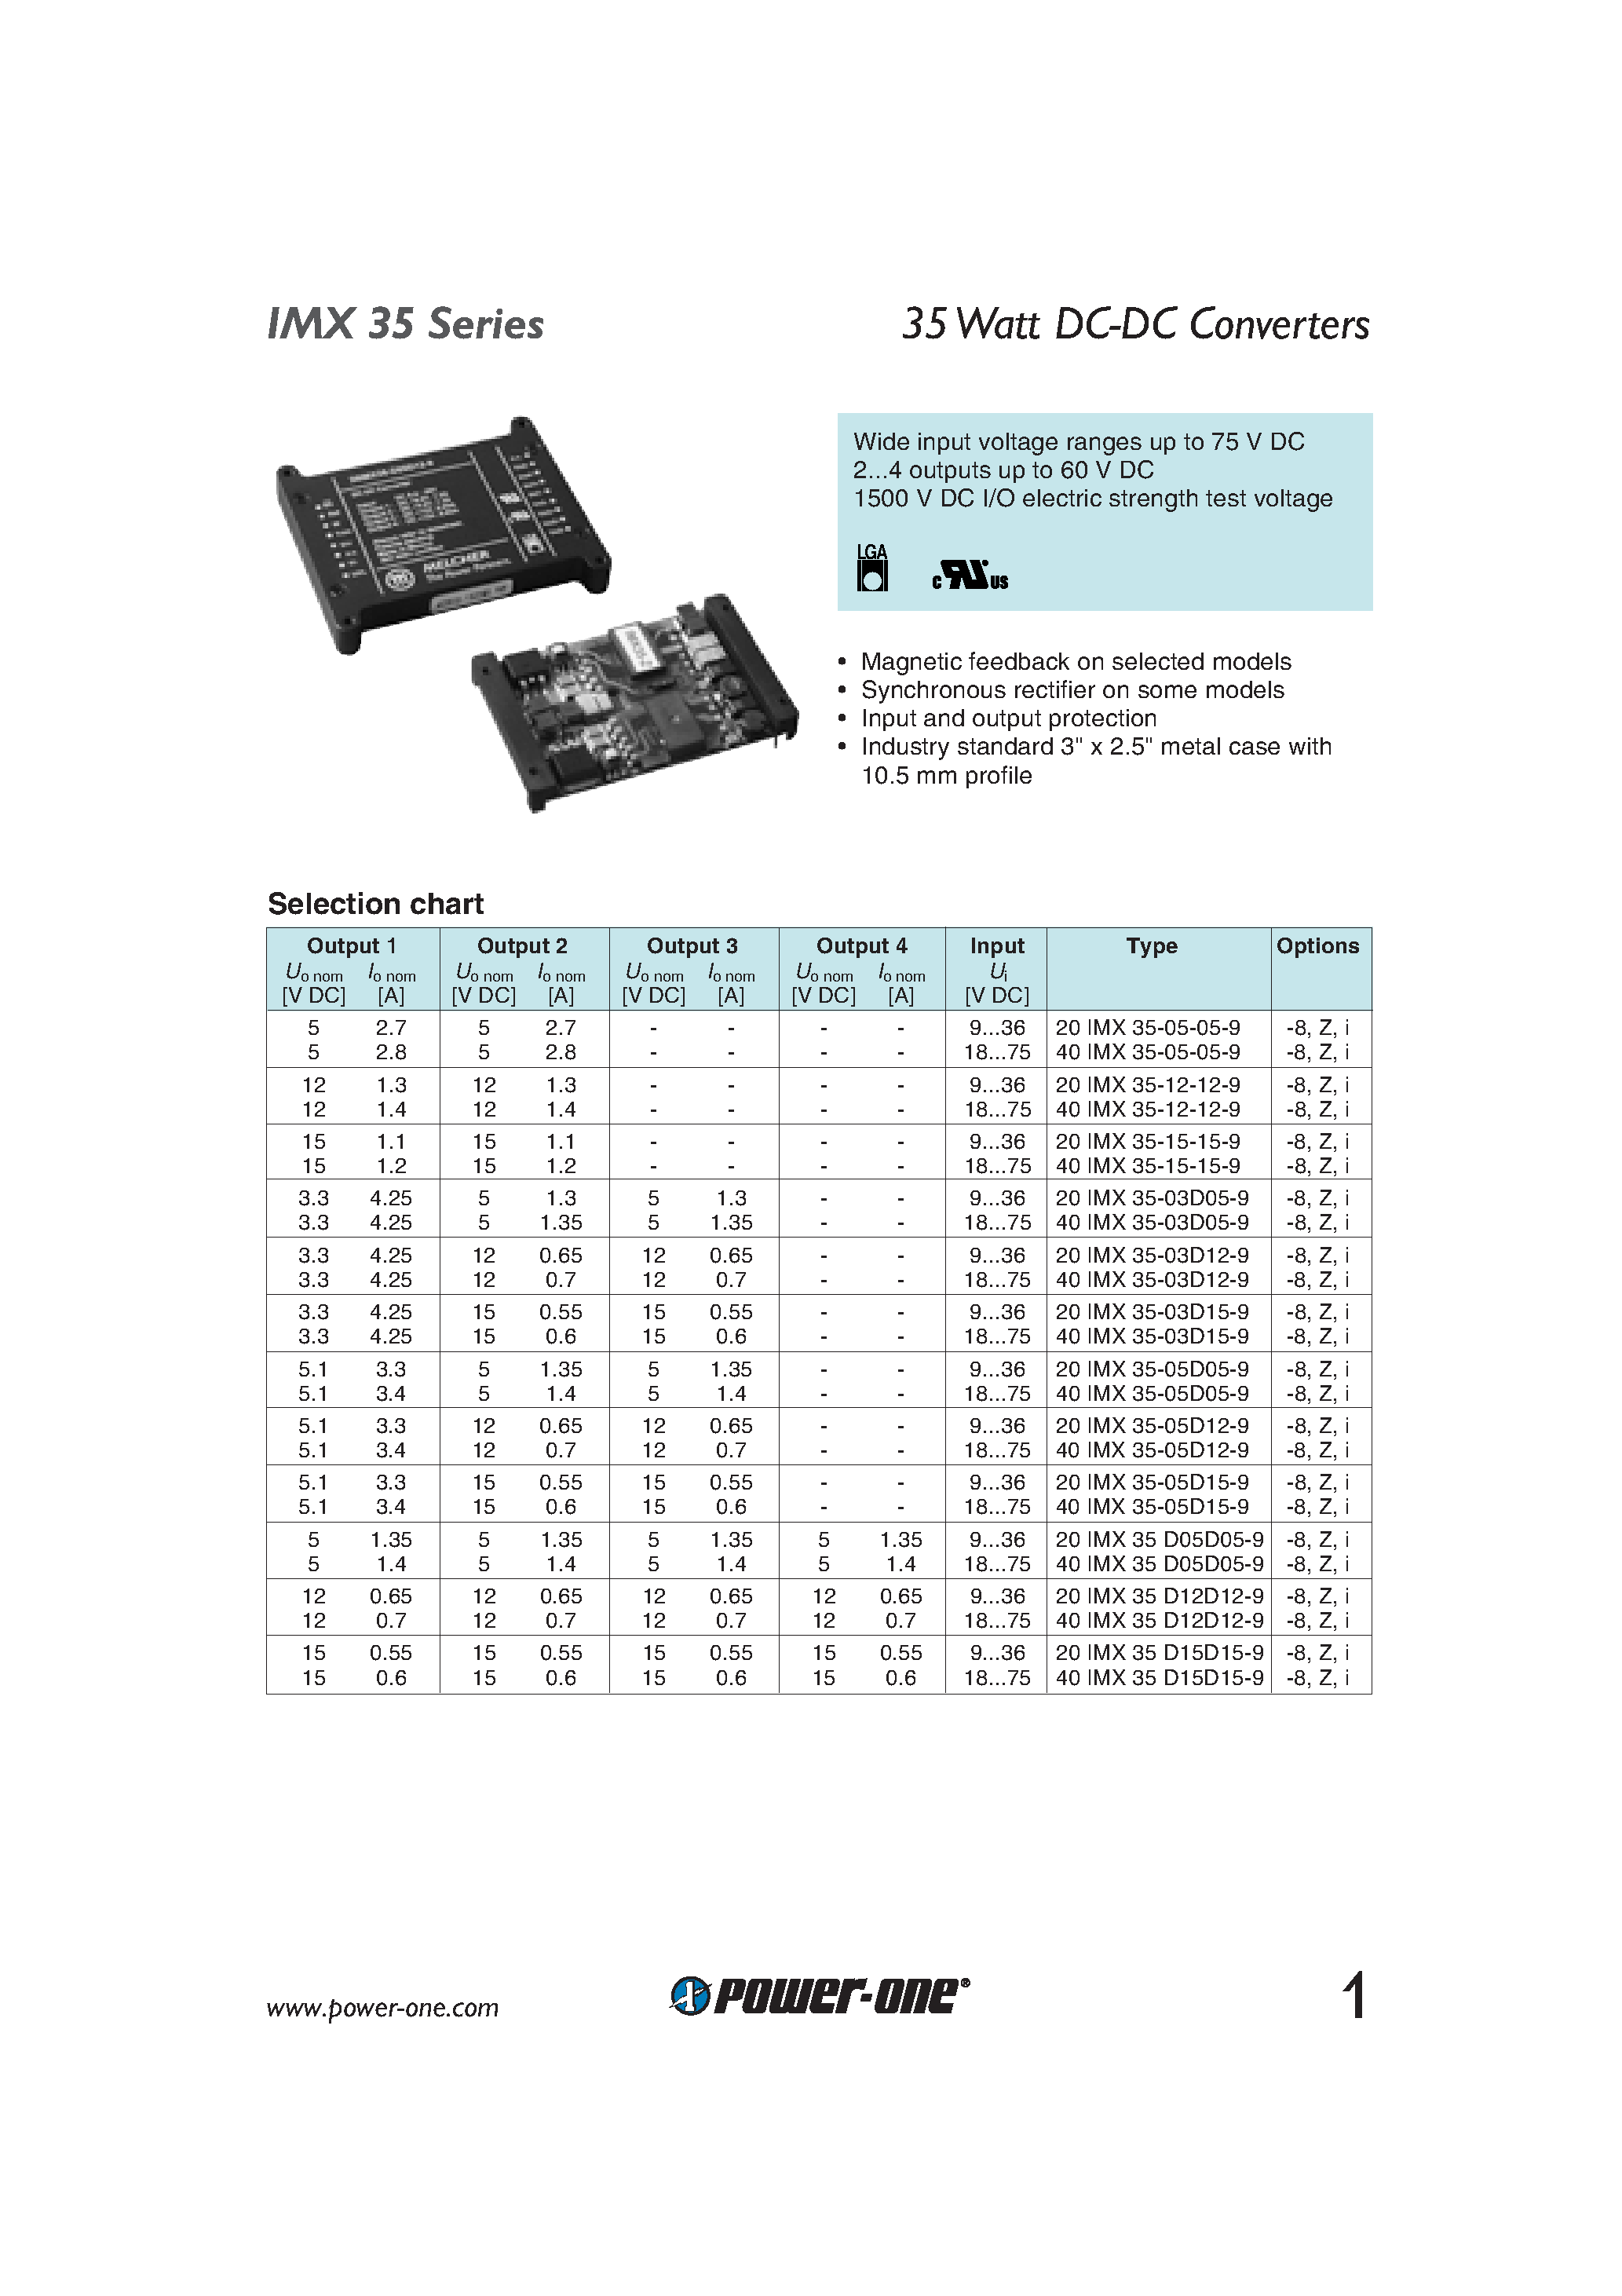 Datasheet 40IMX35-05D12-9 - 35 Watt DC-DC Converters page 1